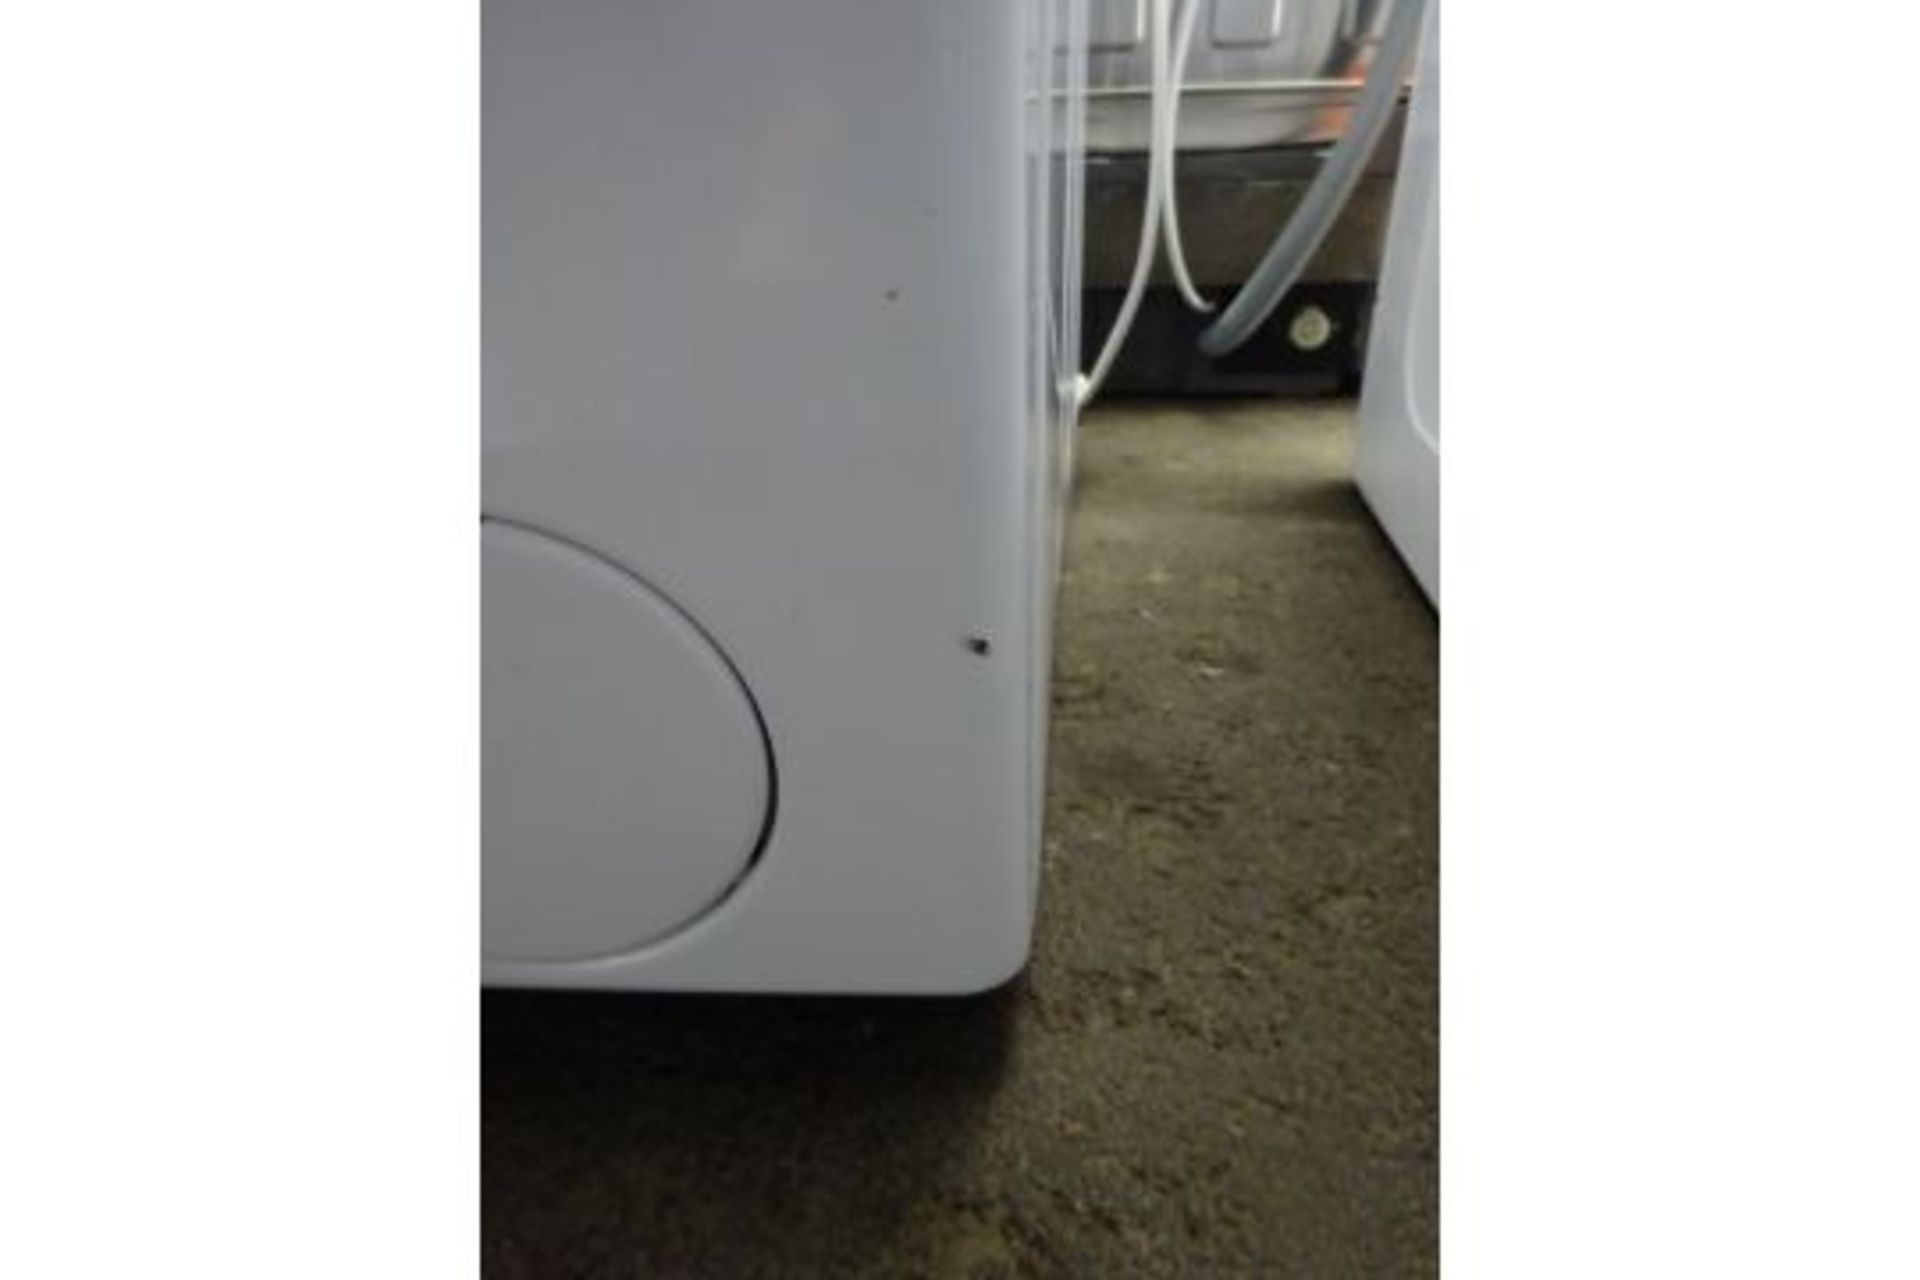 Bush WMDF612W 6KG 1200 Spin Washing Machine - White - ARGOS RRP £179.99 - Image 5 of 5